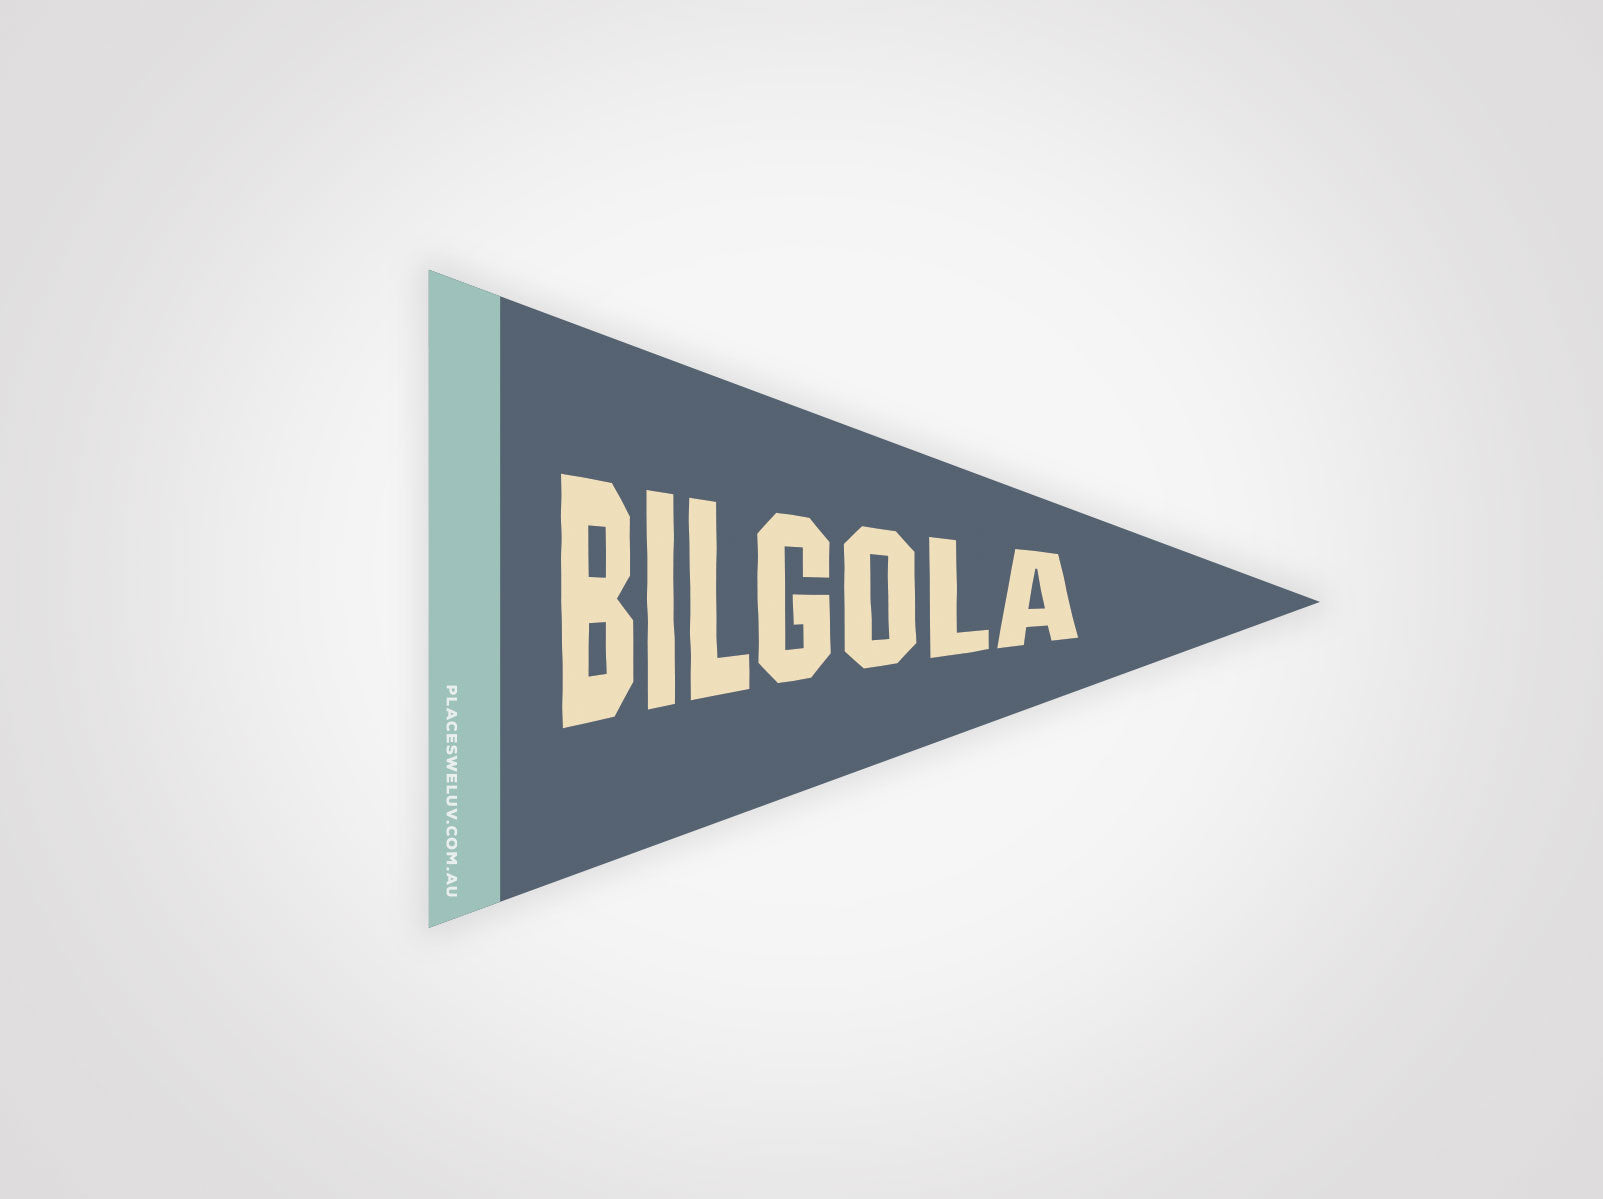 Bilgola beach vintage travel flag by places we luv